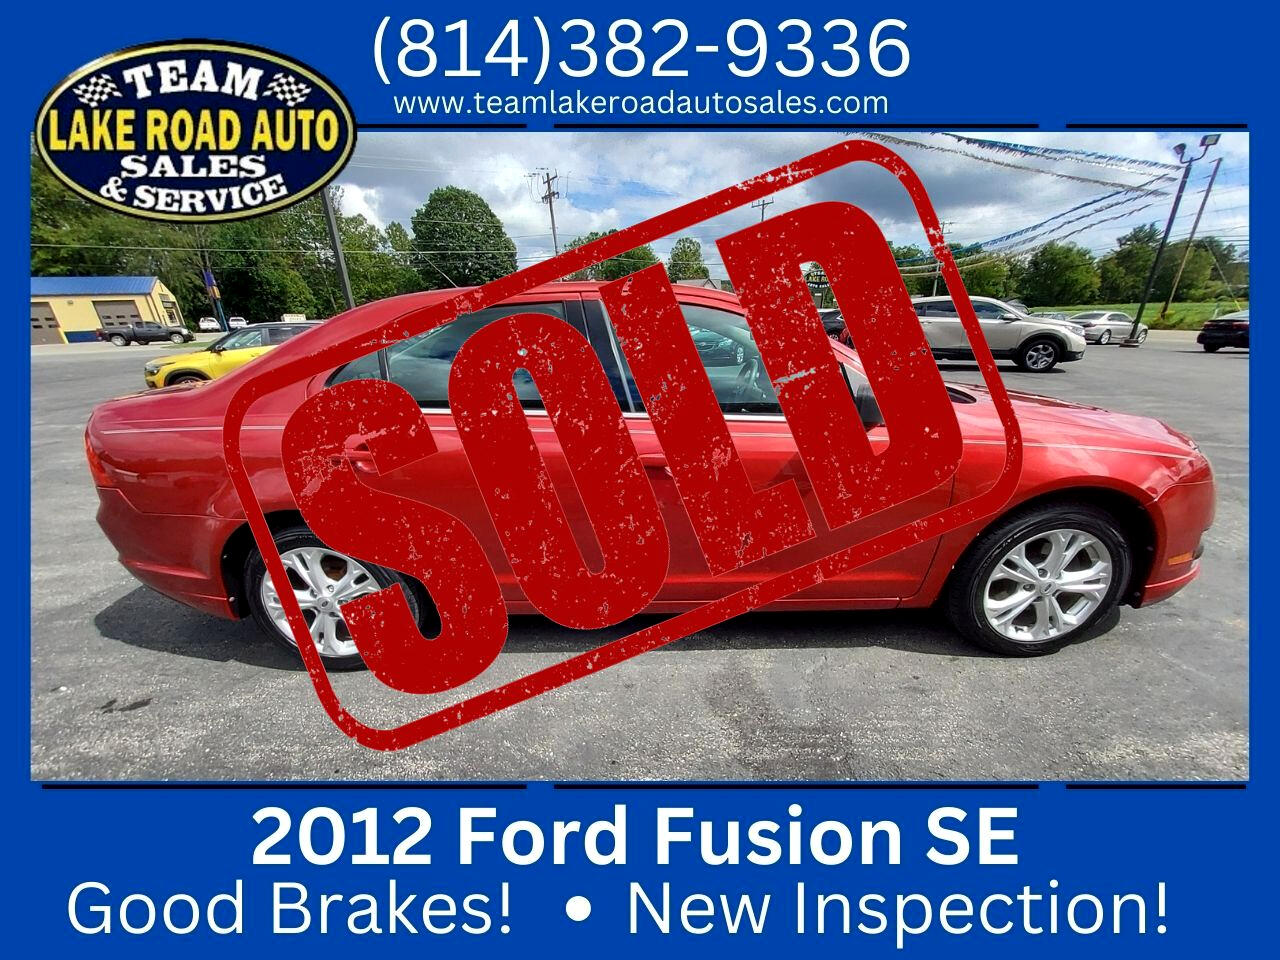 2012 Ford Fusion 4dr Sdn SE FWD